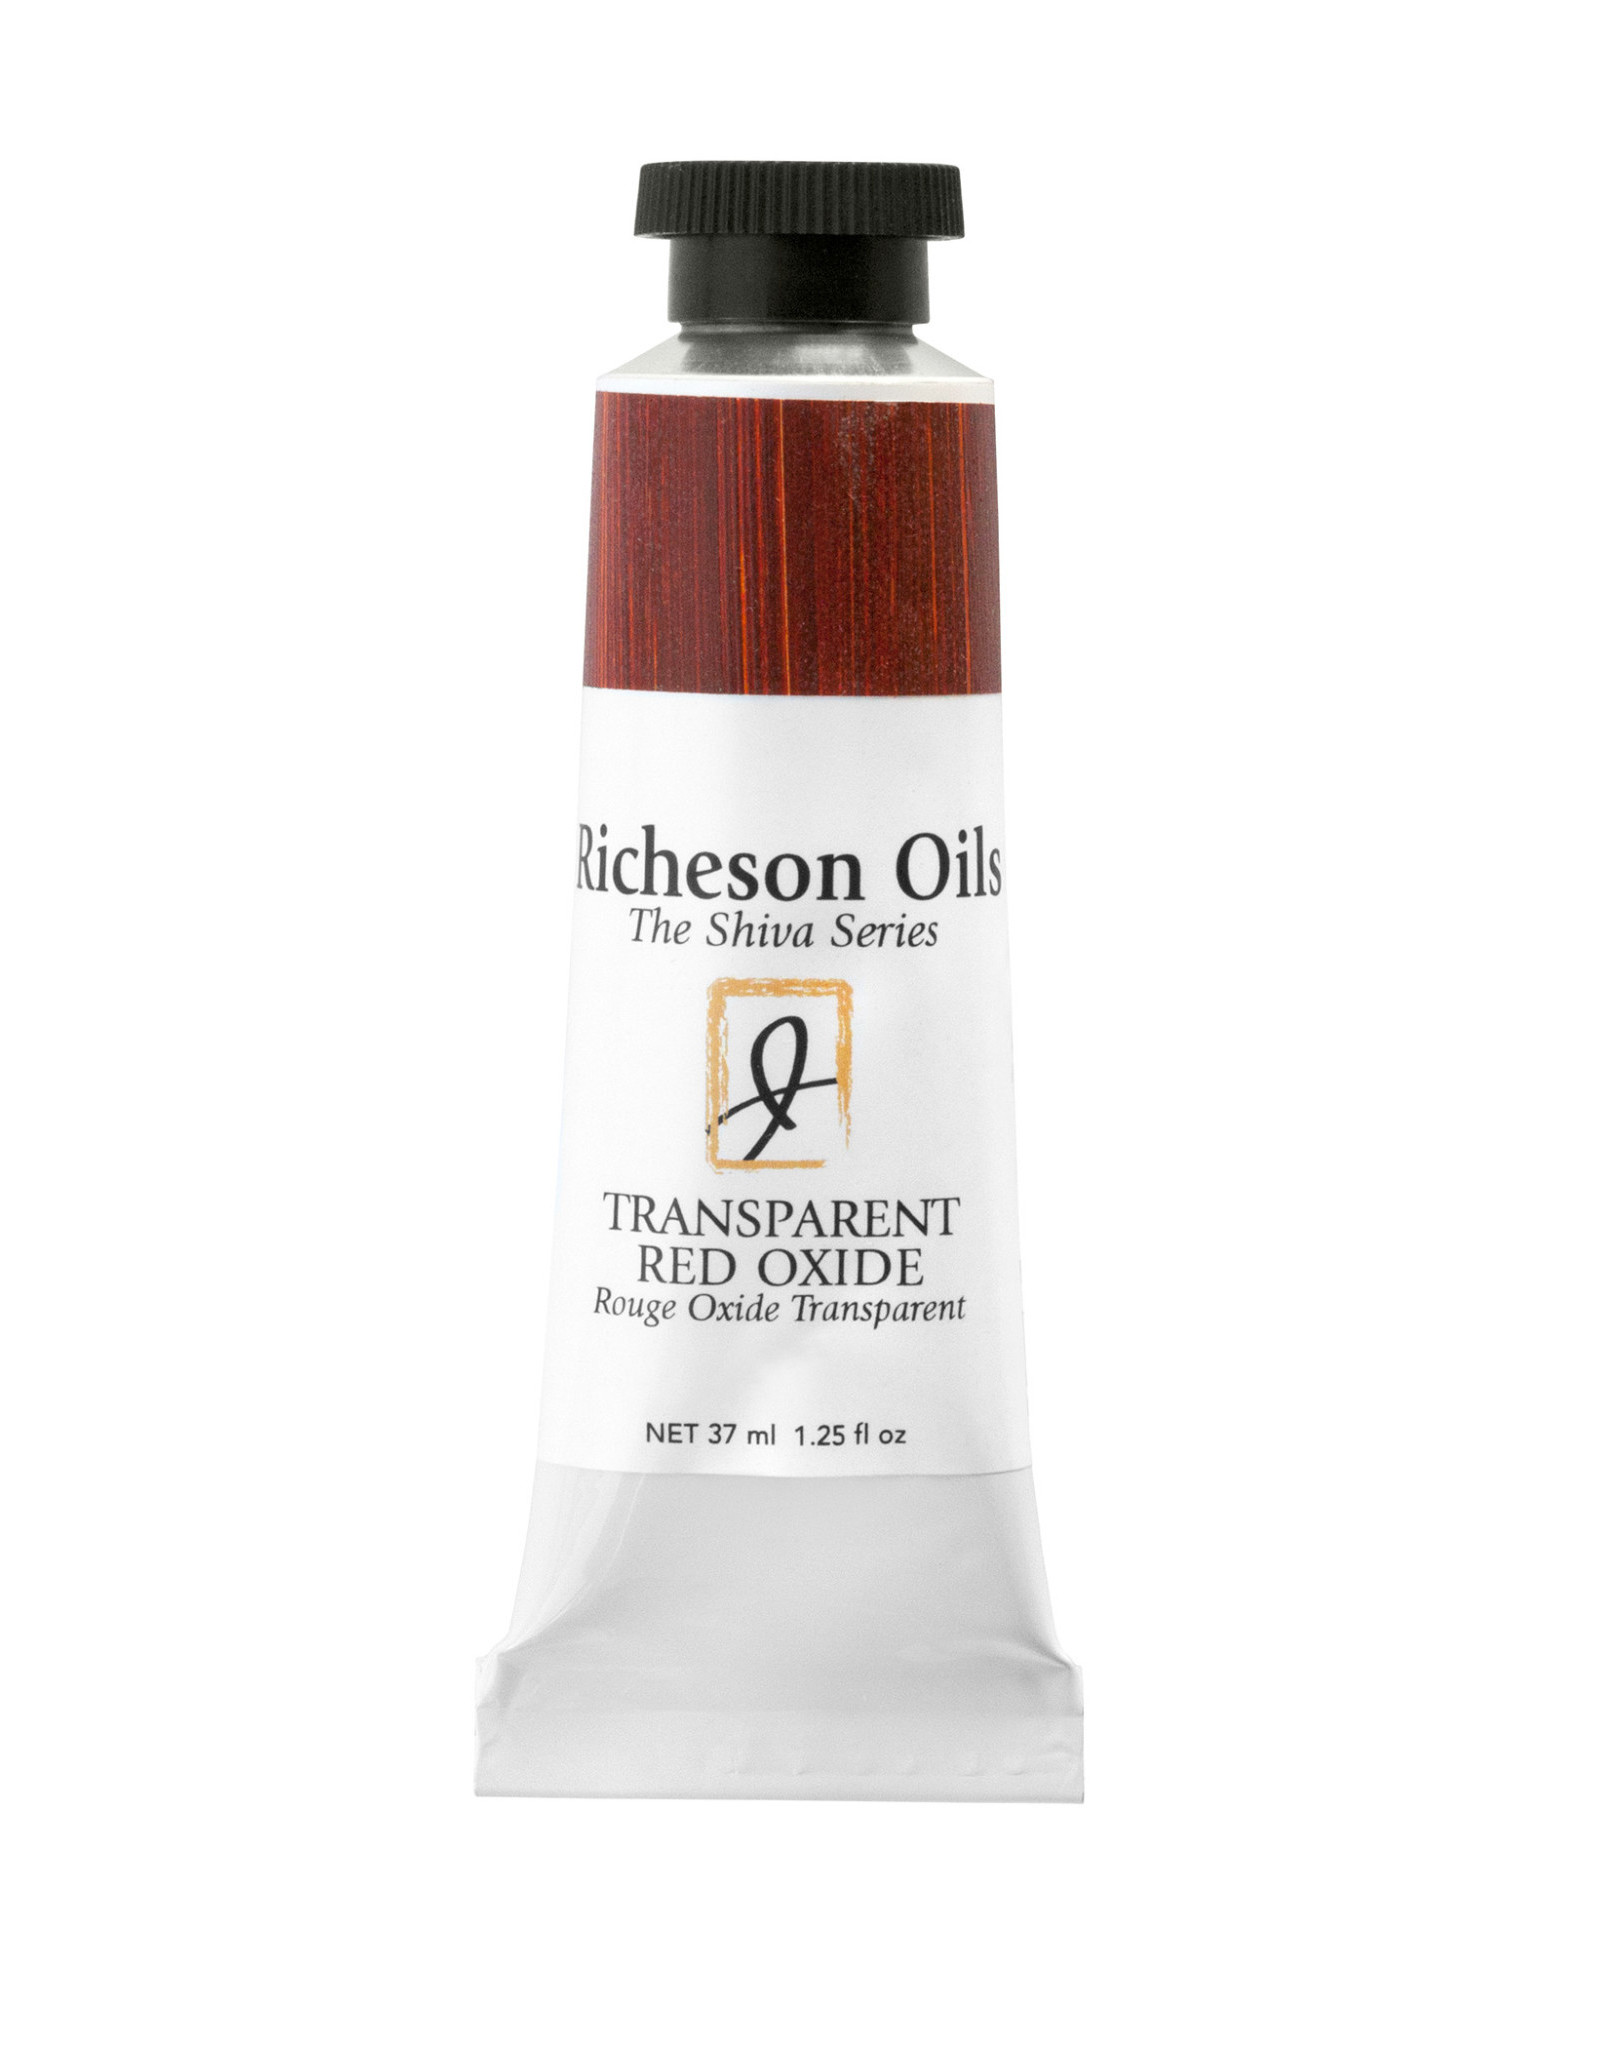 Jack Richeson Jack Richeson Shiva Oil, Transparent Red Oxide 37ml